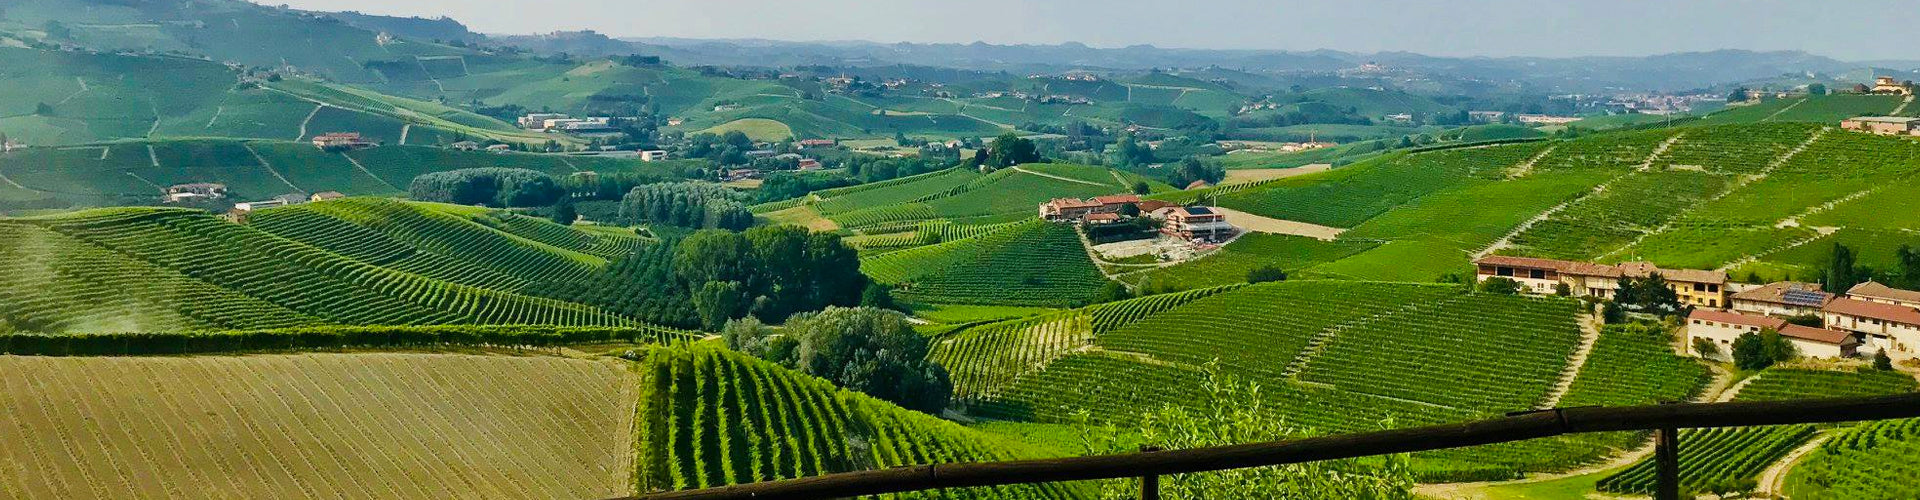 View over Giacomo Fenocchio Vineyards in Monforte d'Alba